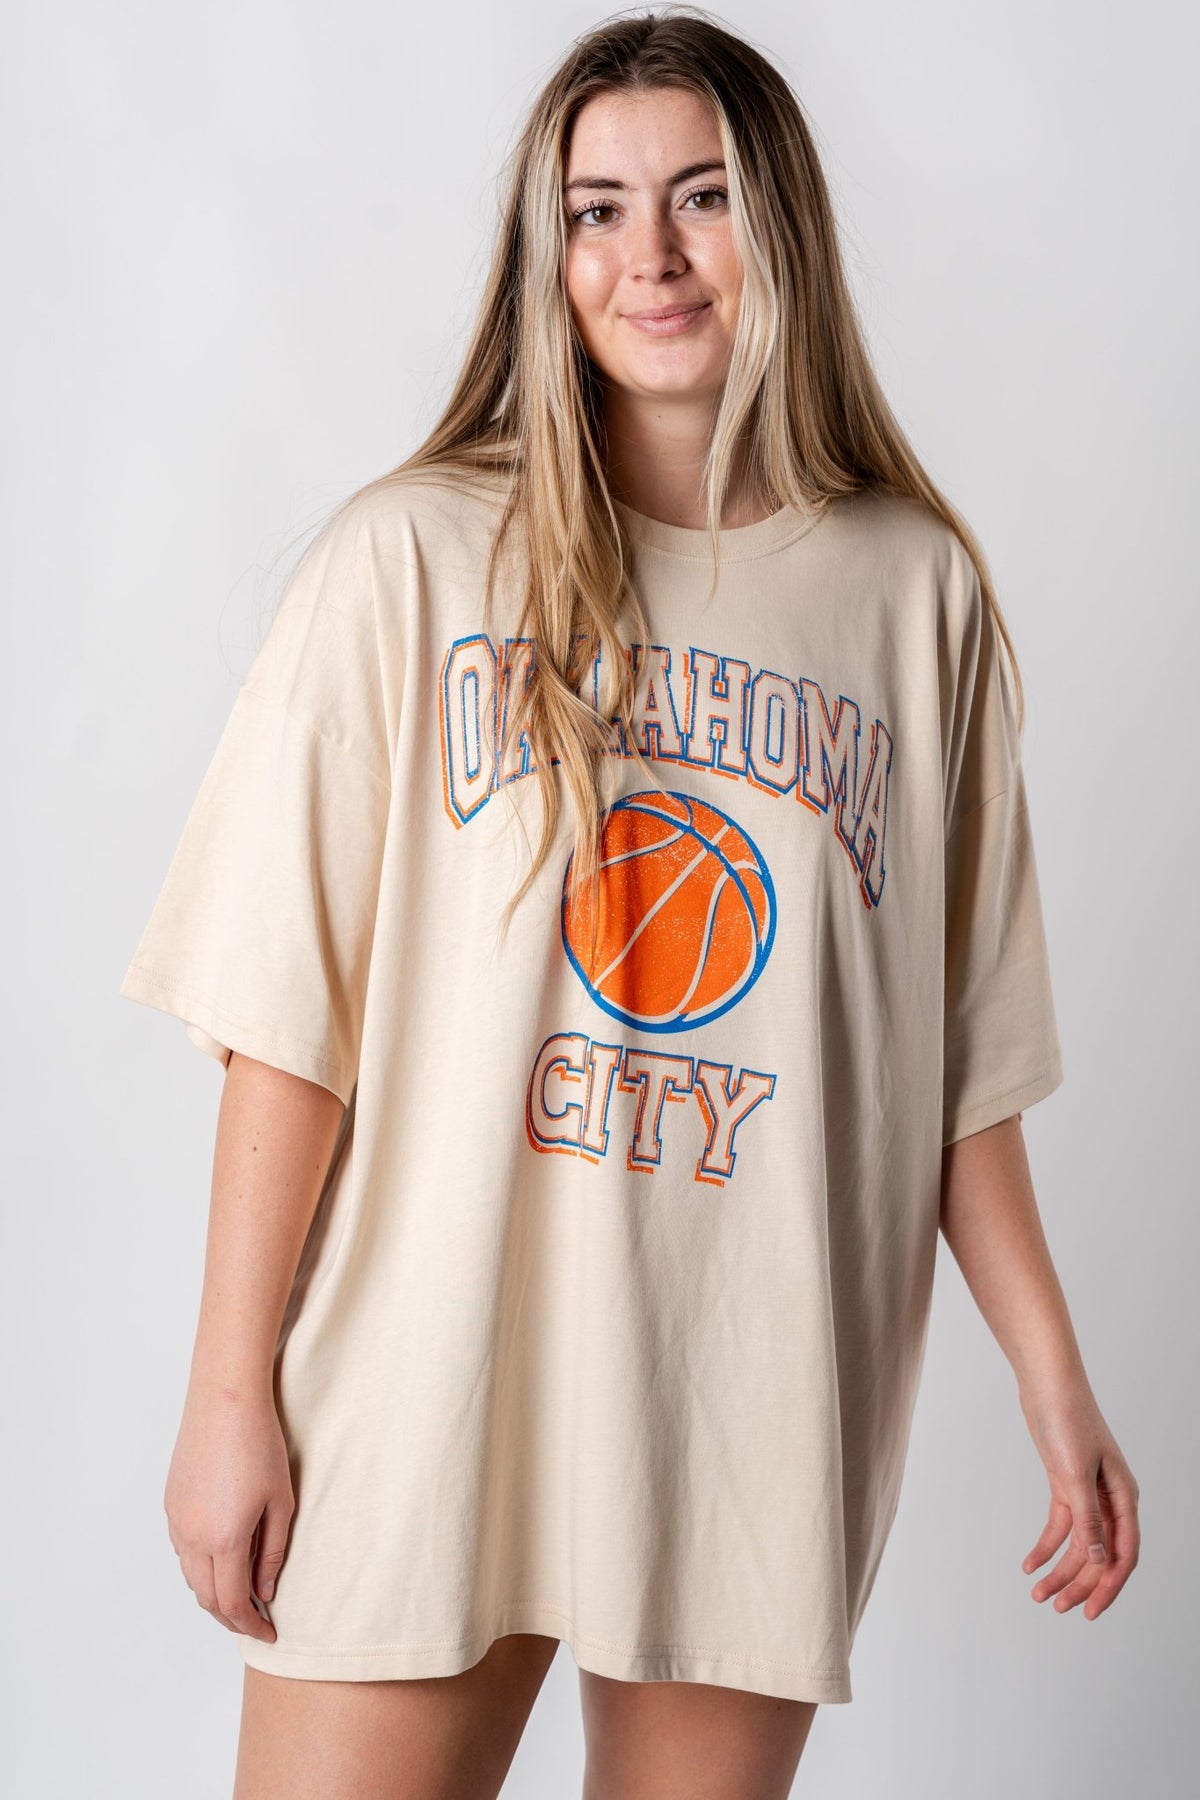 OKC Wonka oversized t-shirt off white - Trendy OKC Apparel at Lush Fashion Lounge Boutique in Oklahoma City